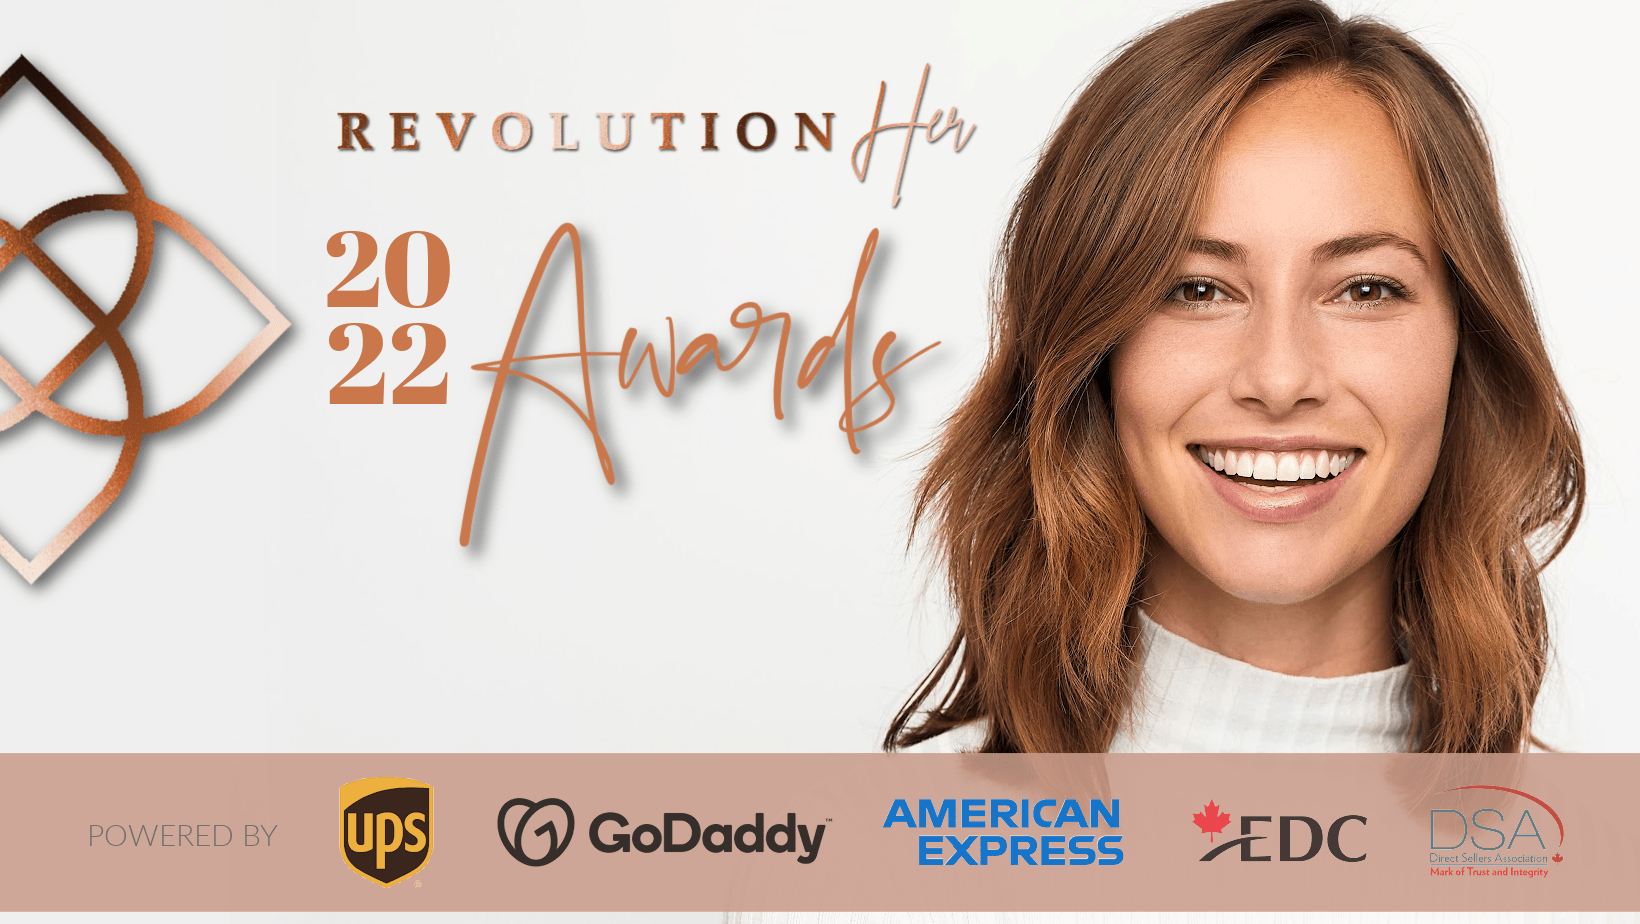 2022 RevolutionHer Awards sponsored by UPS, GoDaddy, American Express, EDC, DSA